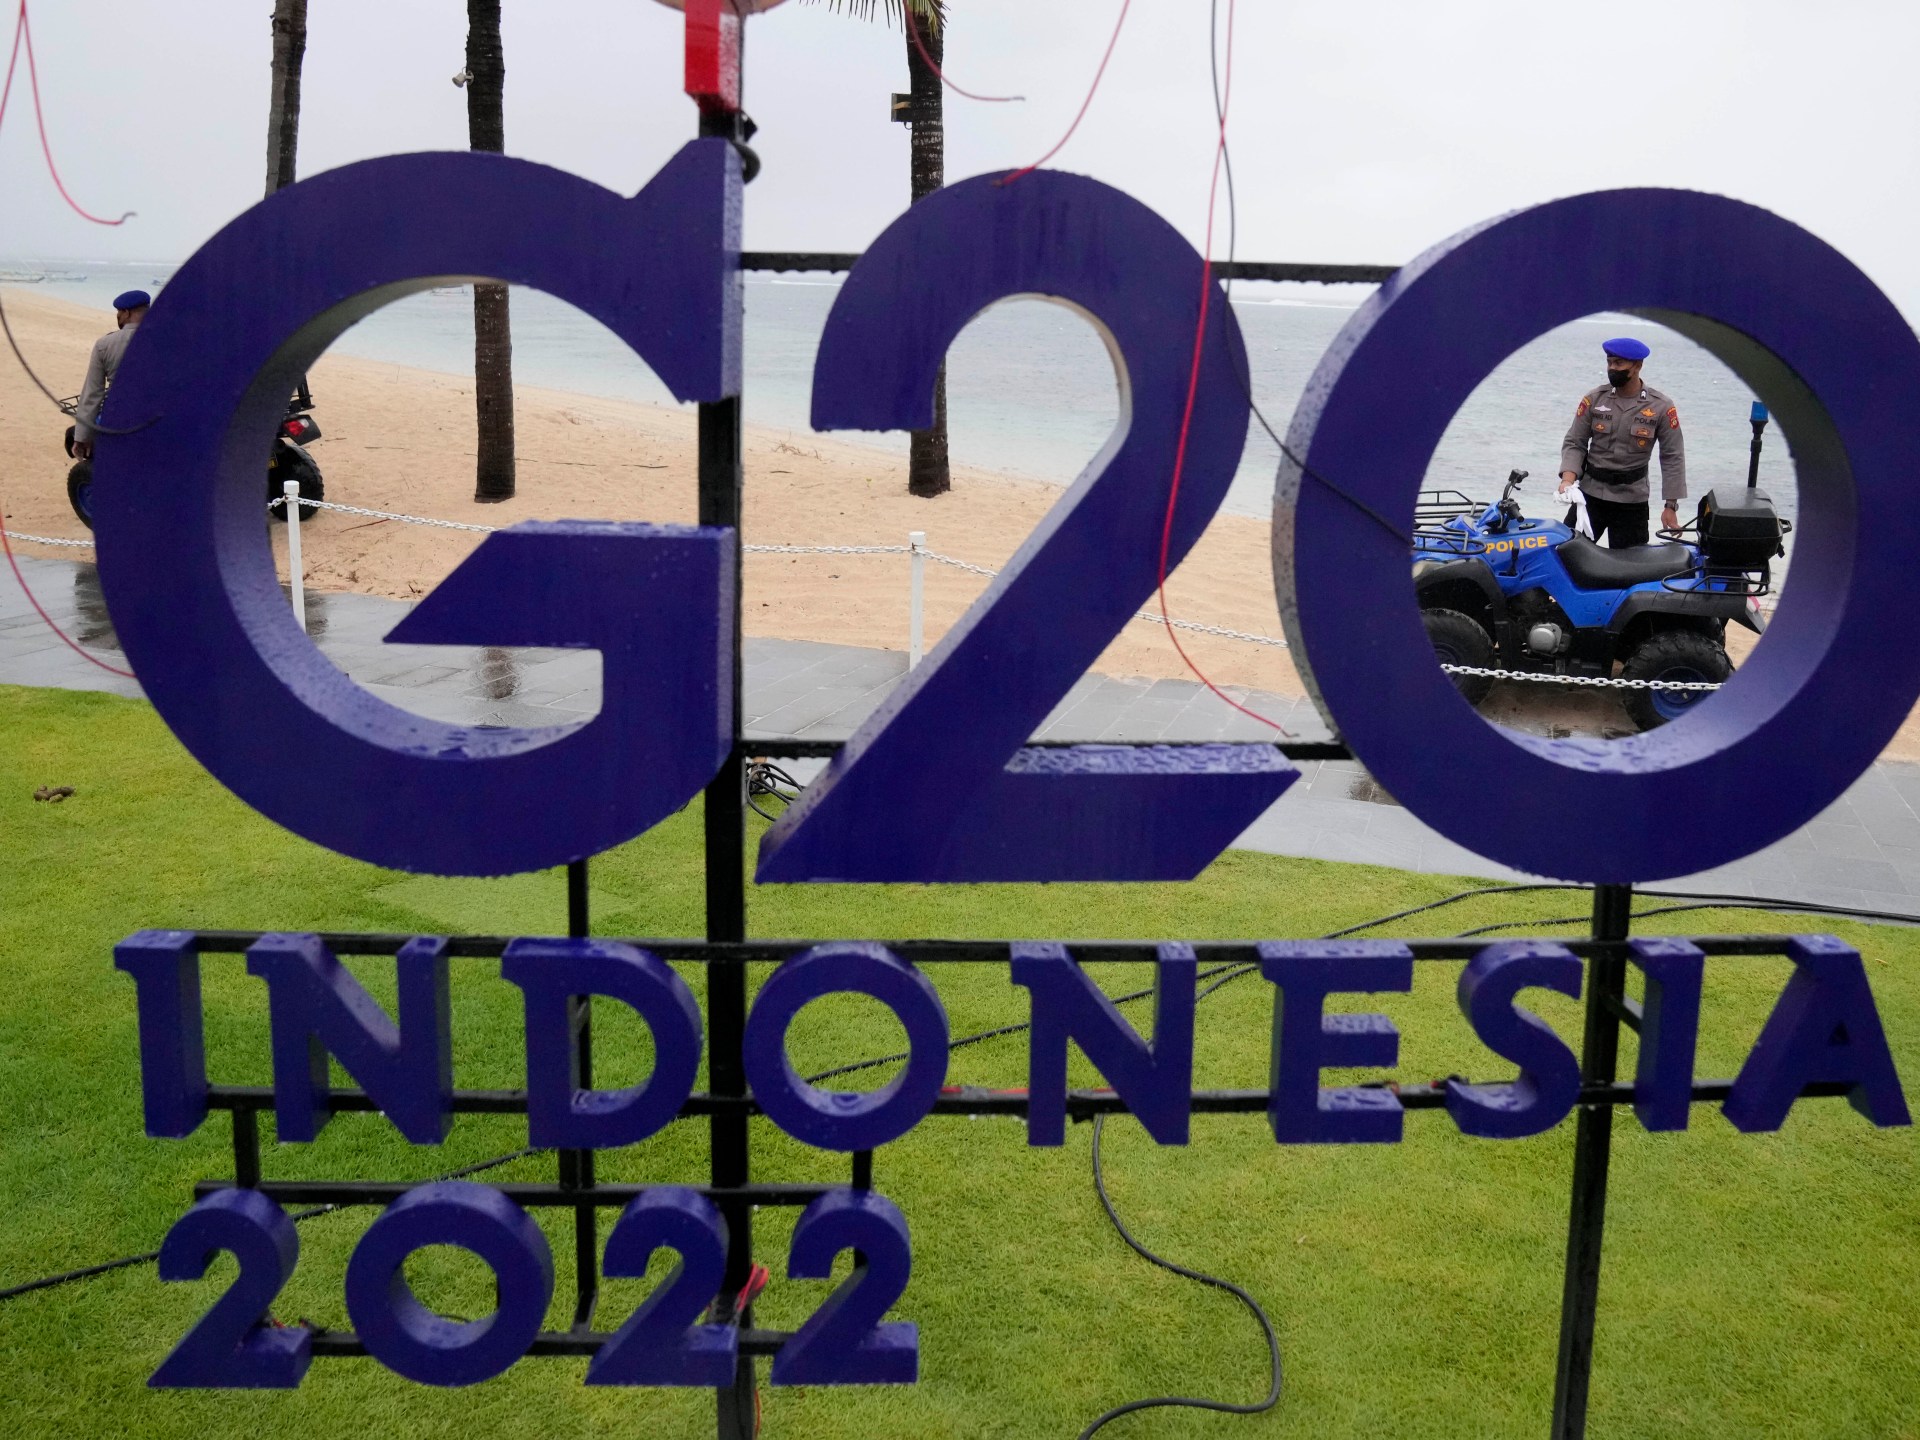 At G20, geopolitical tensions cloud financial agenda